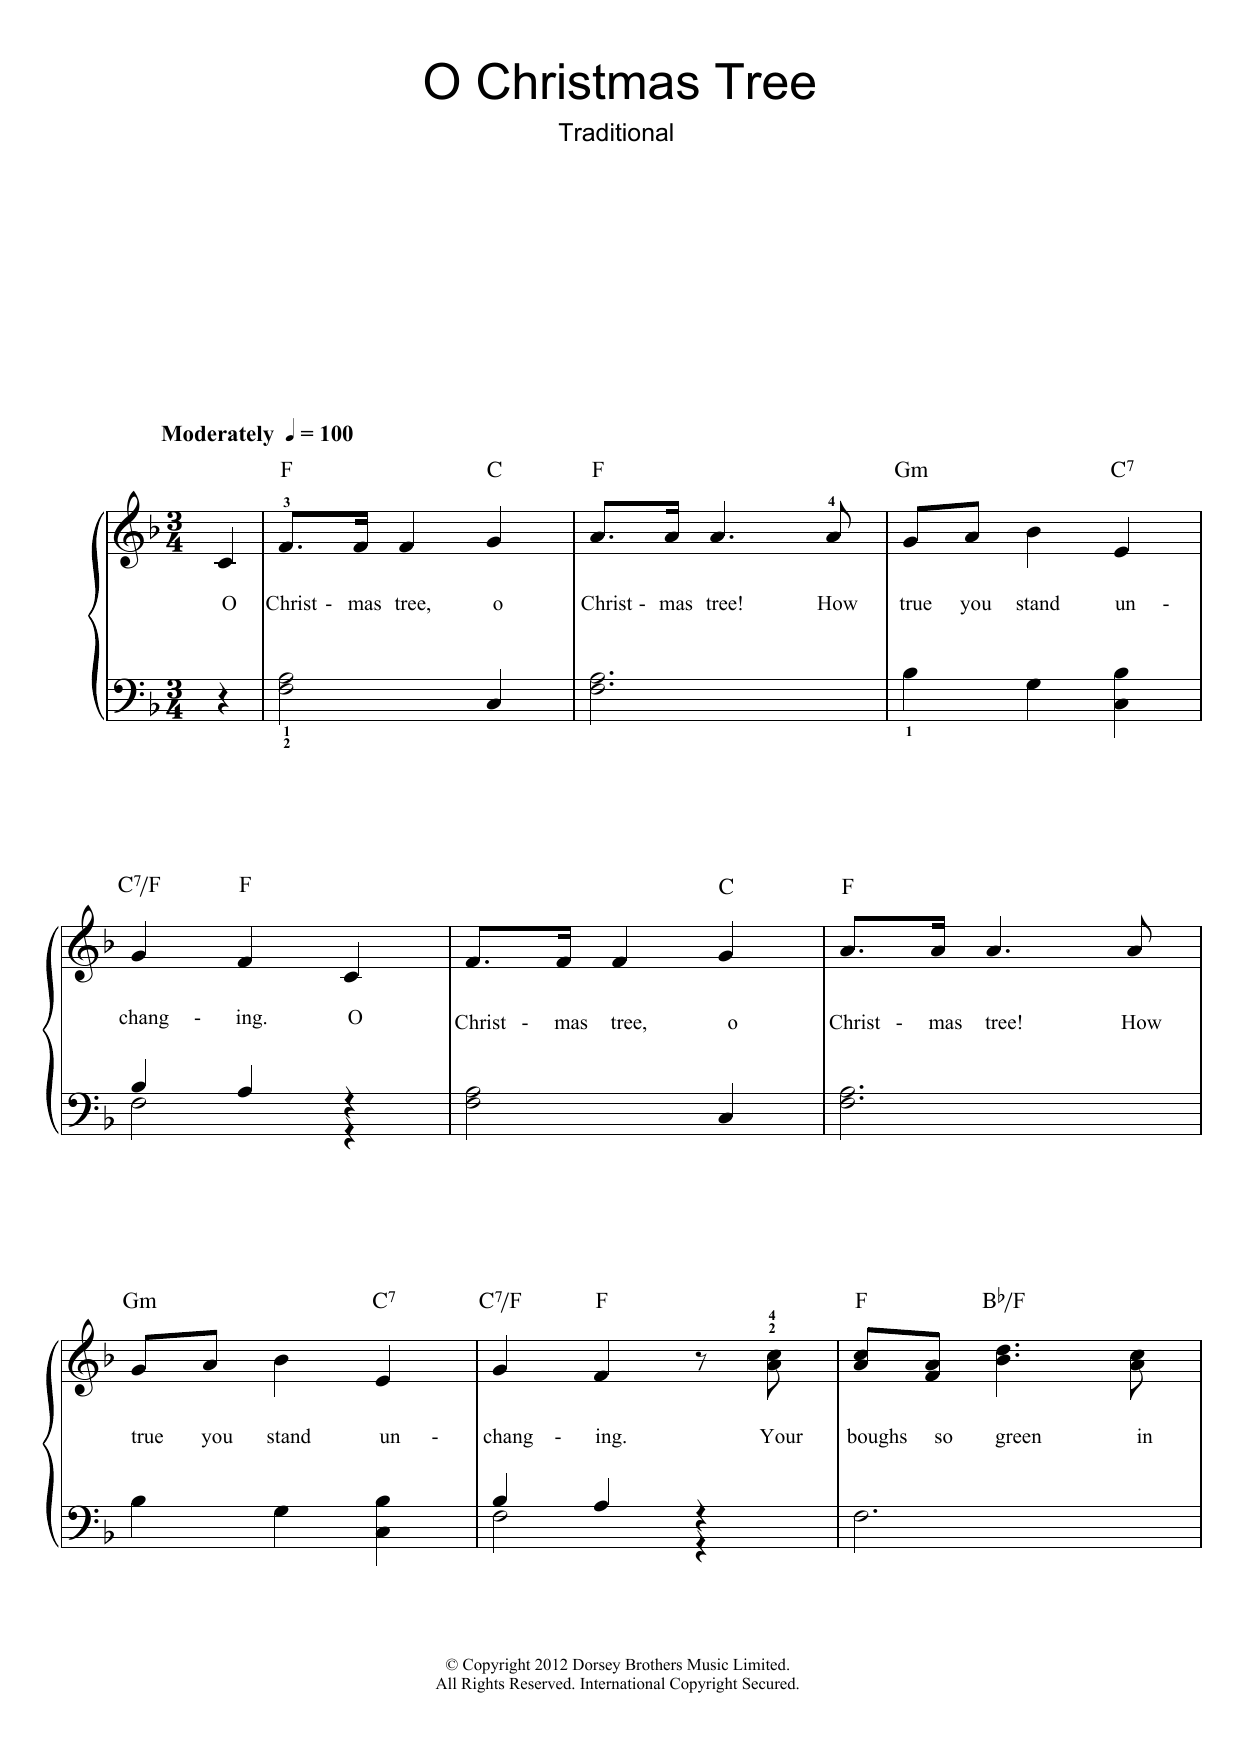 Traditional Carol O Christmas Tree sheet music notes and chords arranged for Piano Chords/Lyrics